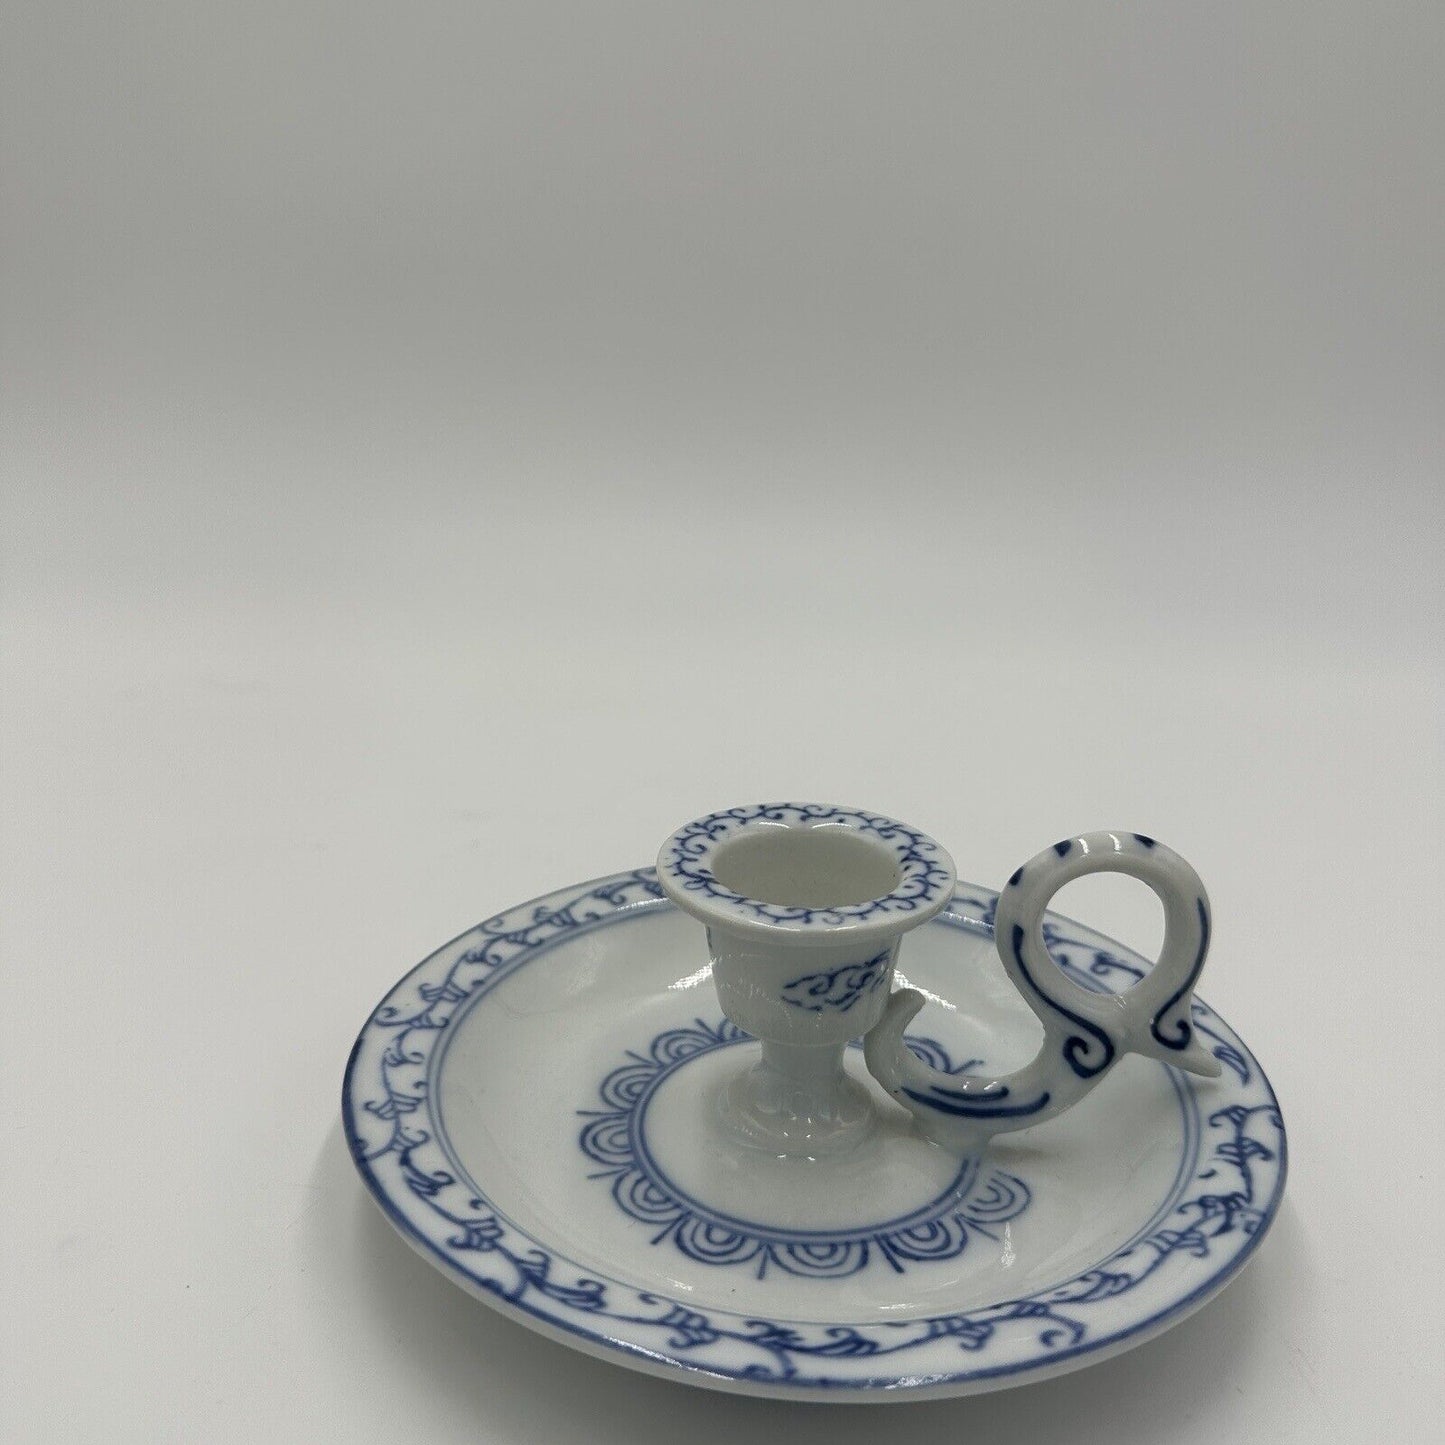 Ming Dynasty Porcelain Candle Holder Vintage Glossy White & Blue Asian Decor